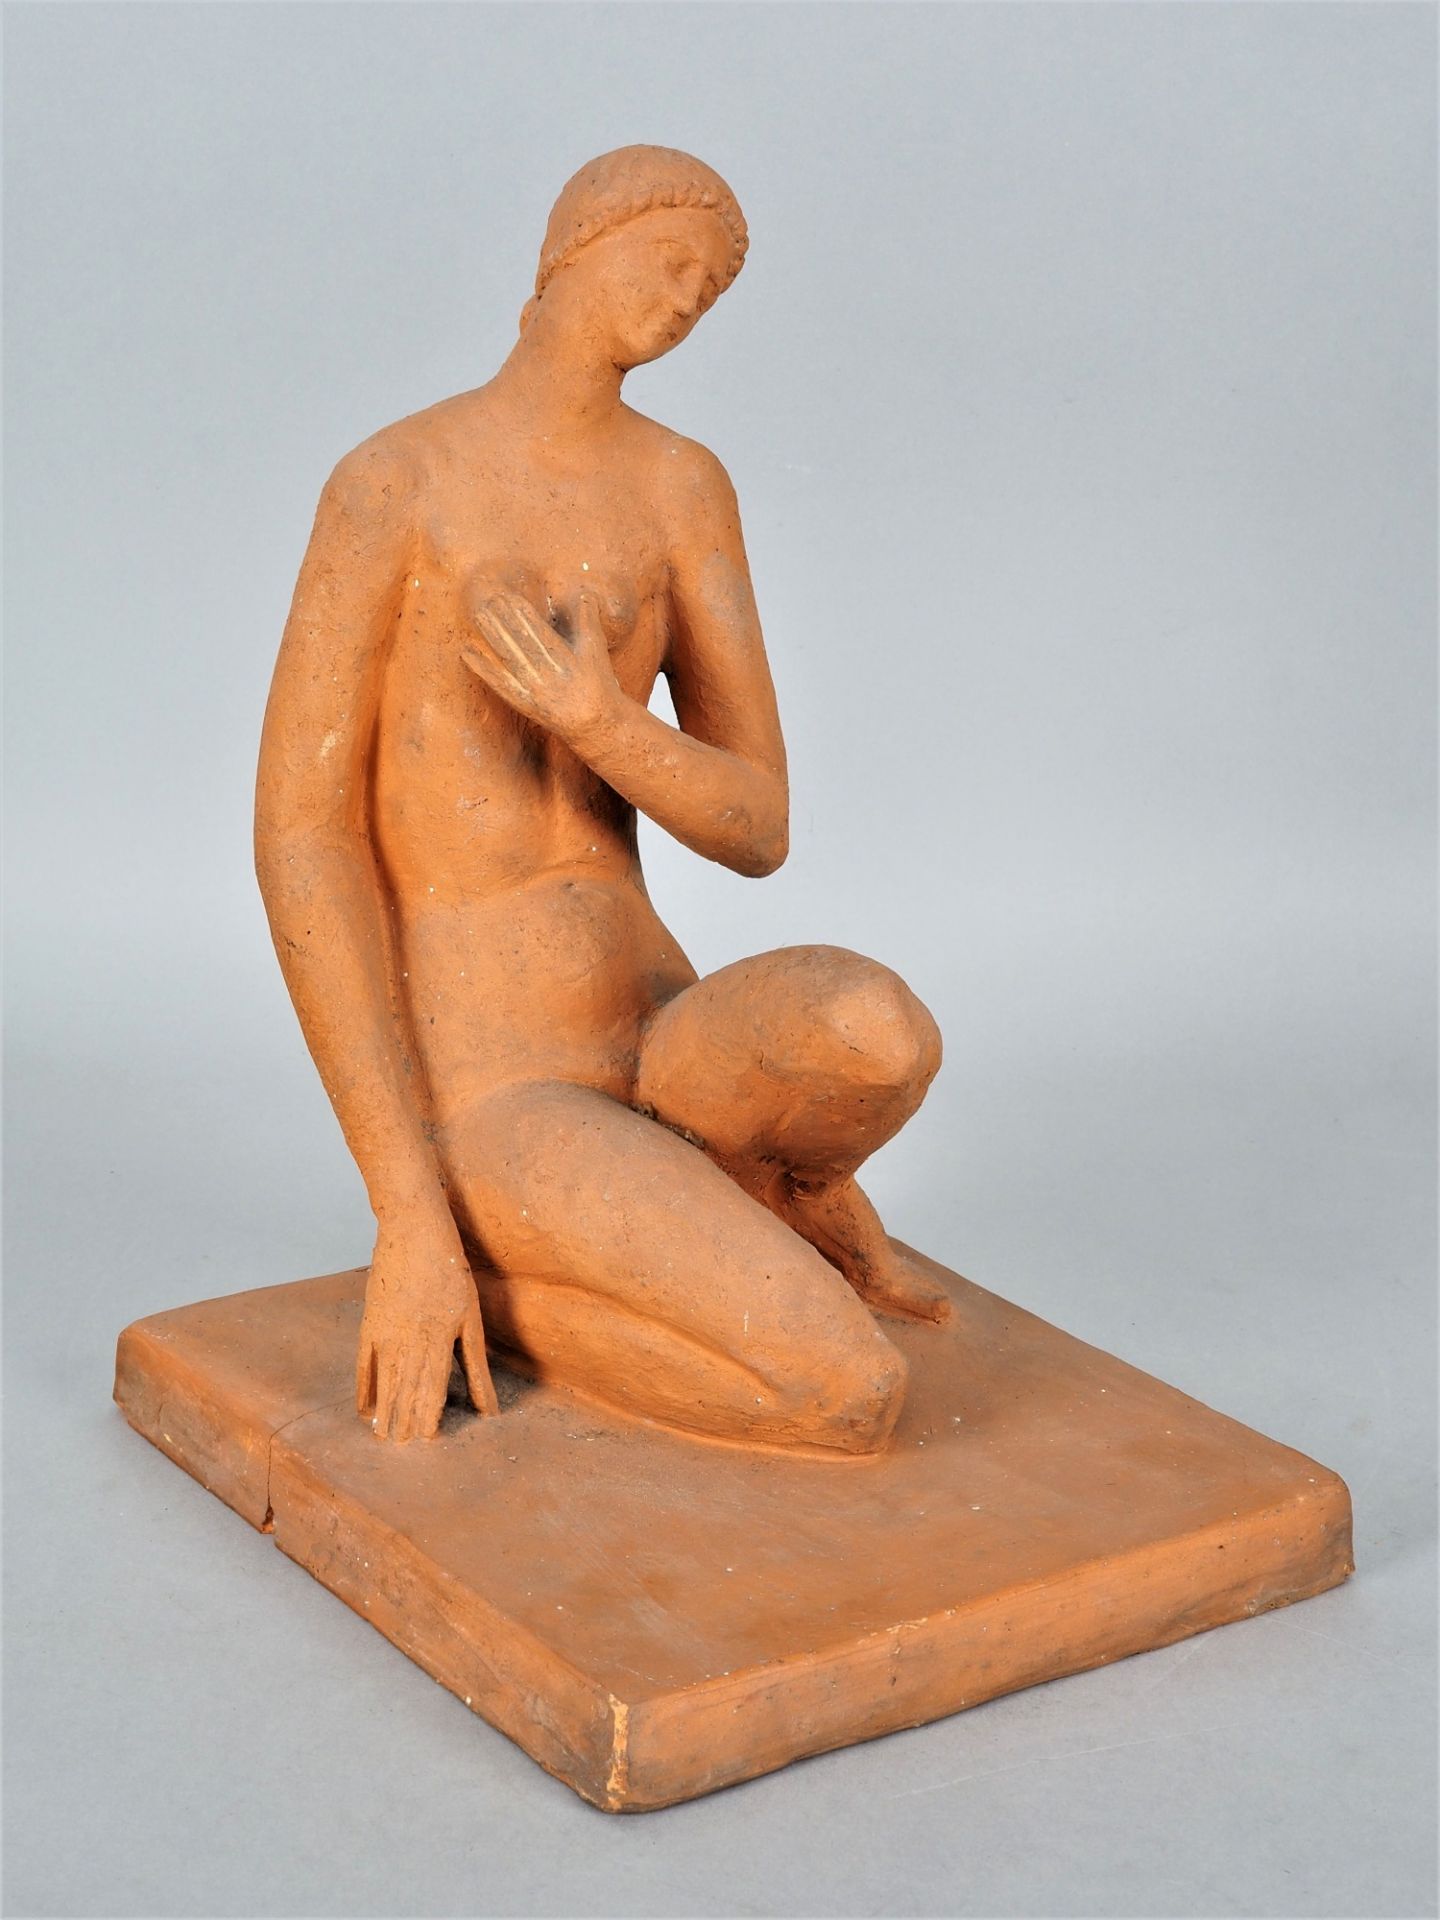 Michael Rauscher (1875, Traberg - 1915, Húszt) - clay sculpture of a female nude.